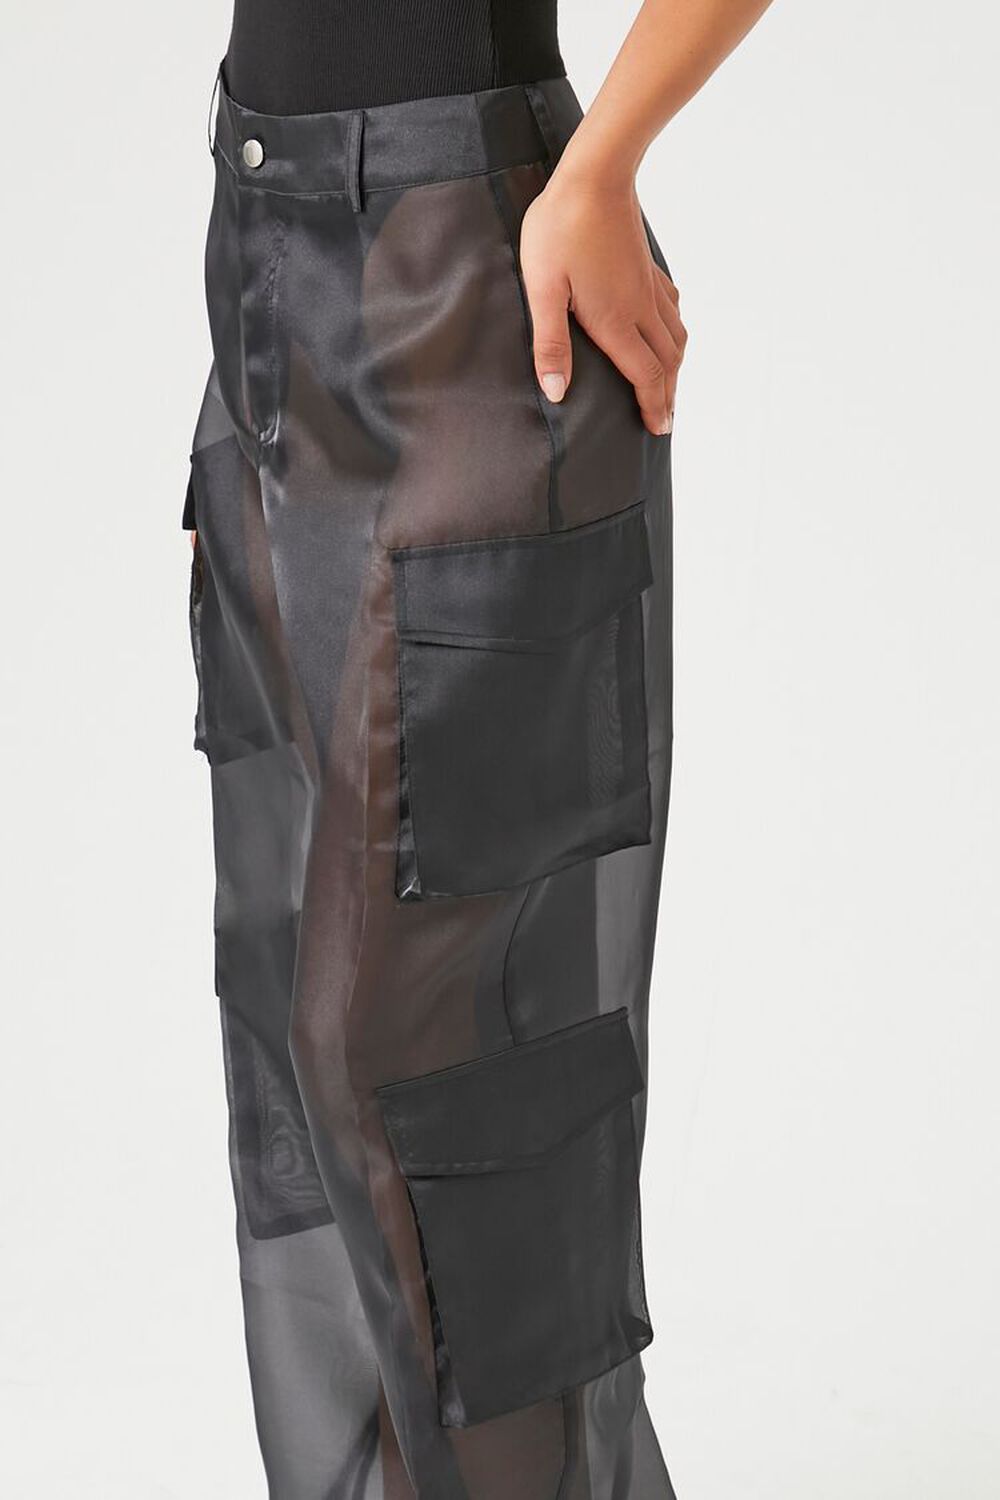 Sexy Black Mesh See-through Hight Waist Cargo Pants Organza Sweatpants  Fashion Summe New Loose Trousers Women Transparent